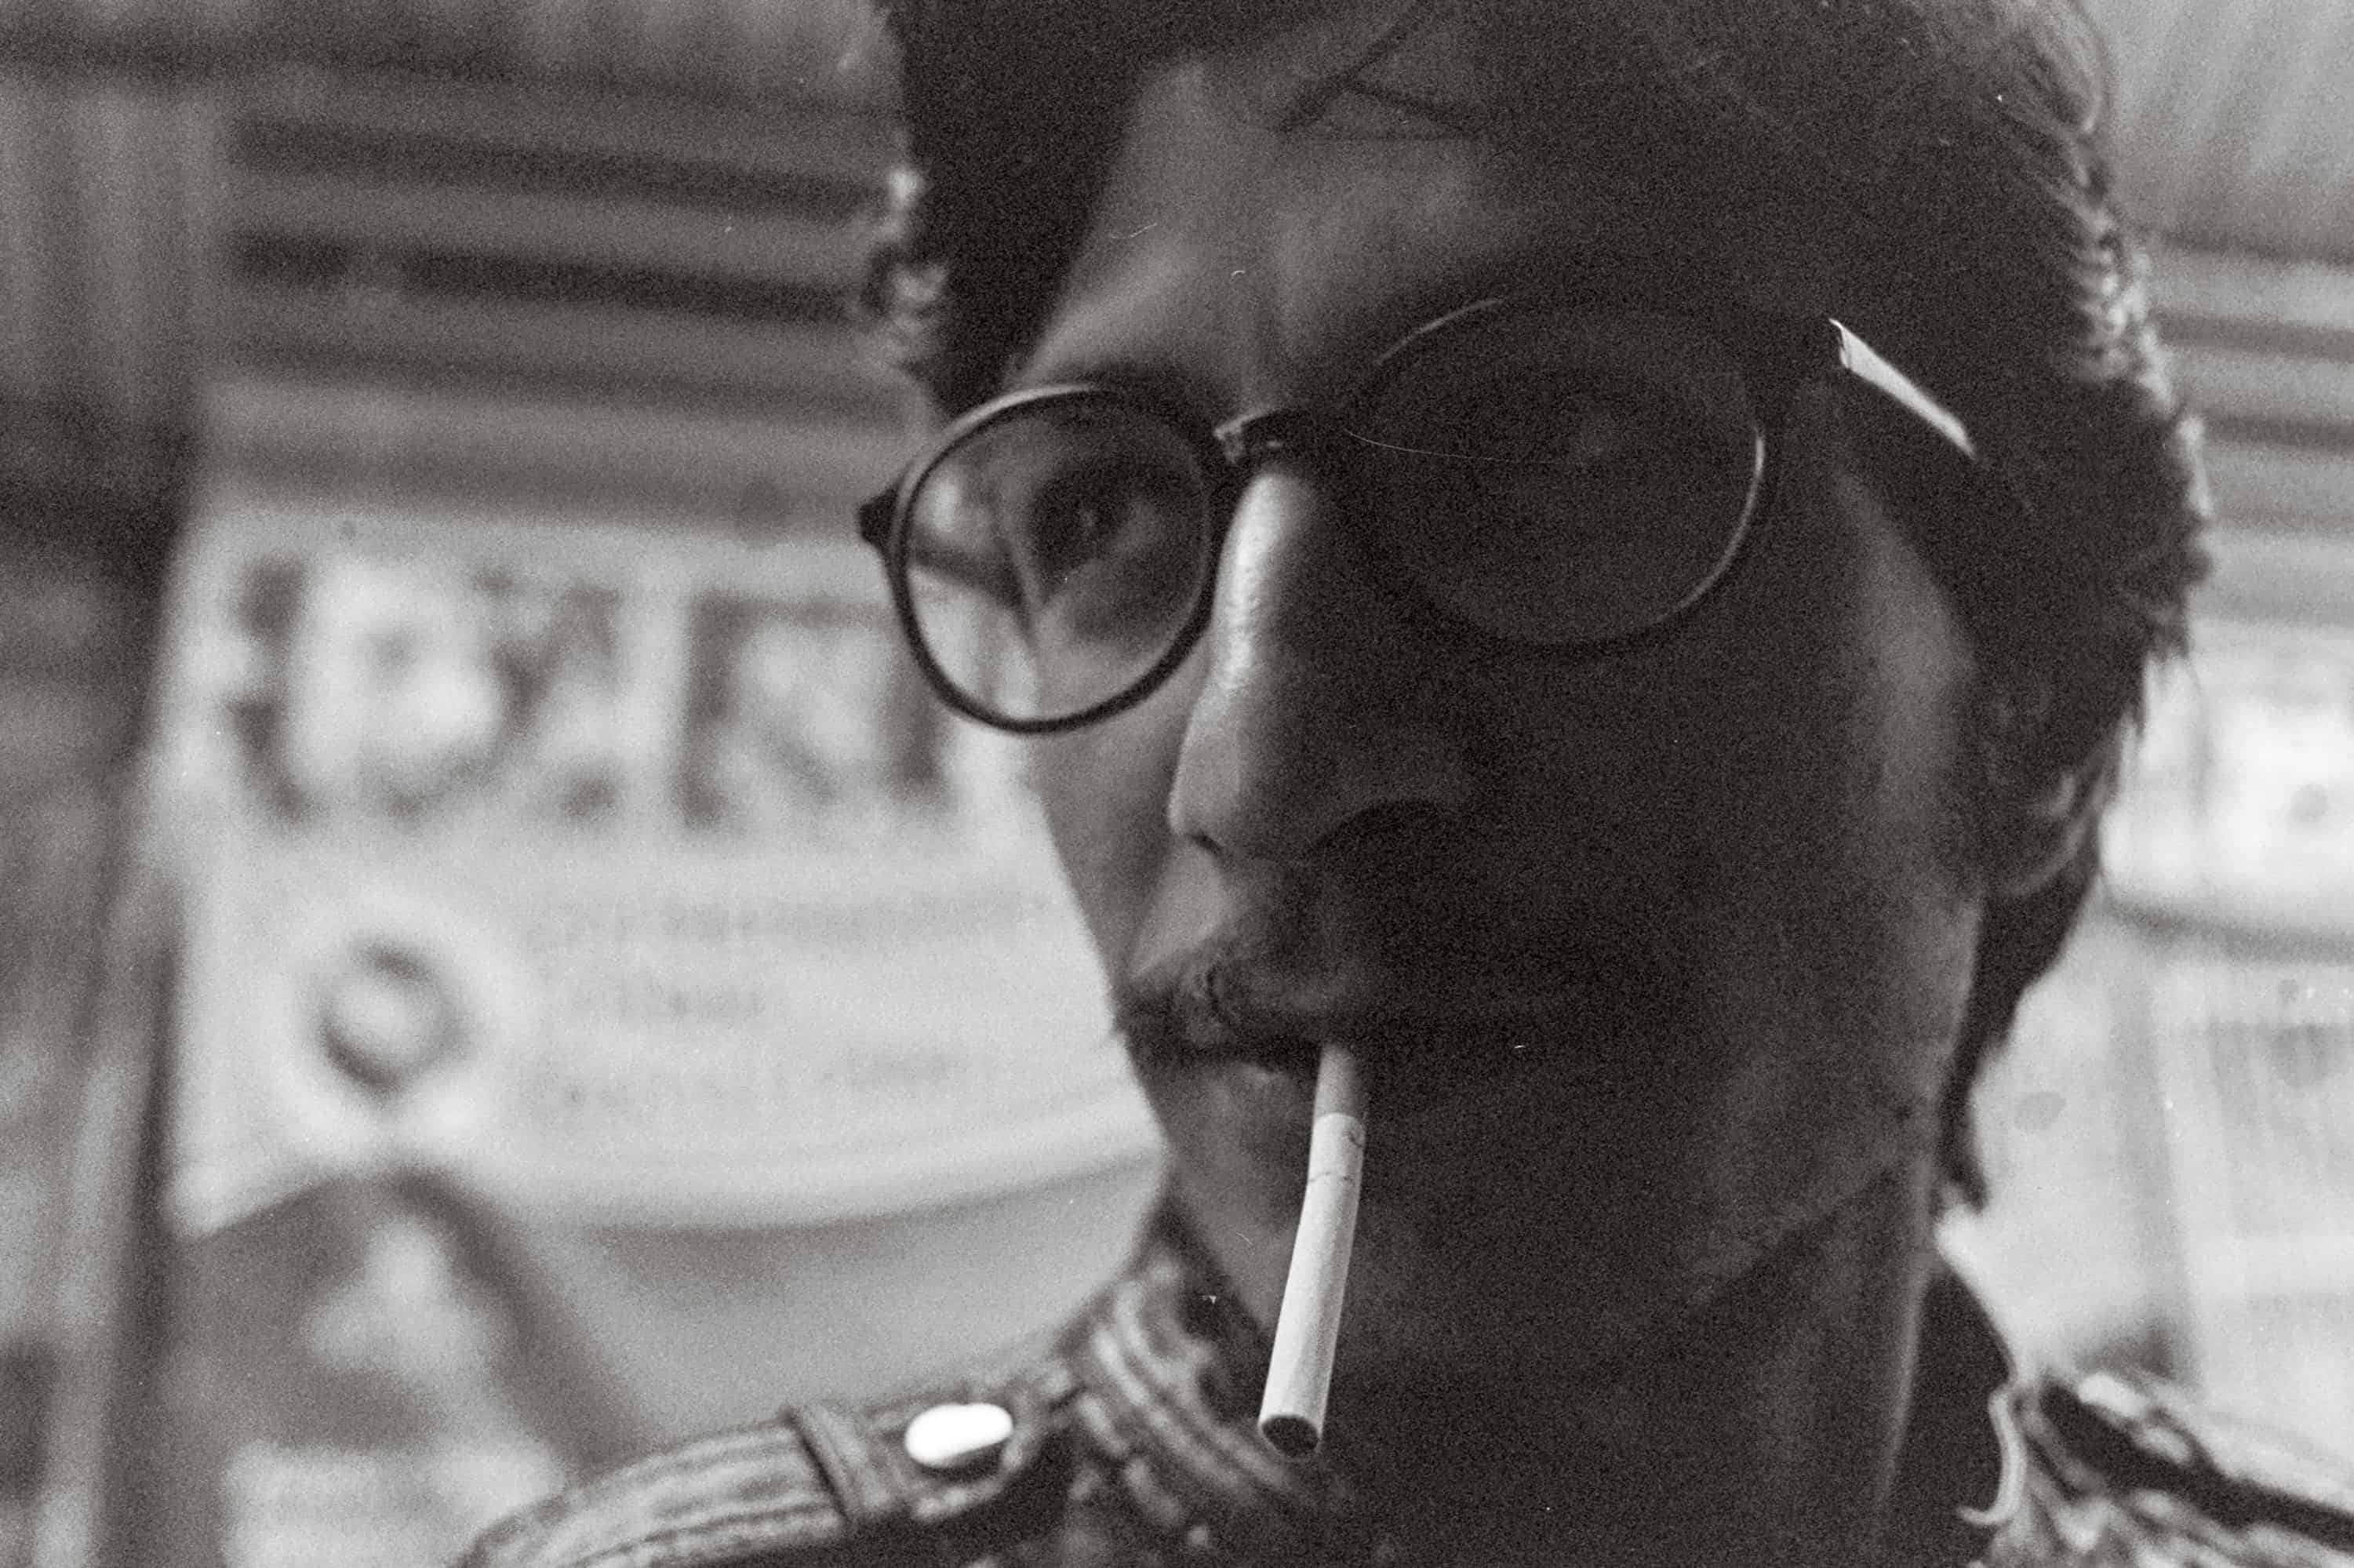 Portrait of Bijan with a cigarette